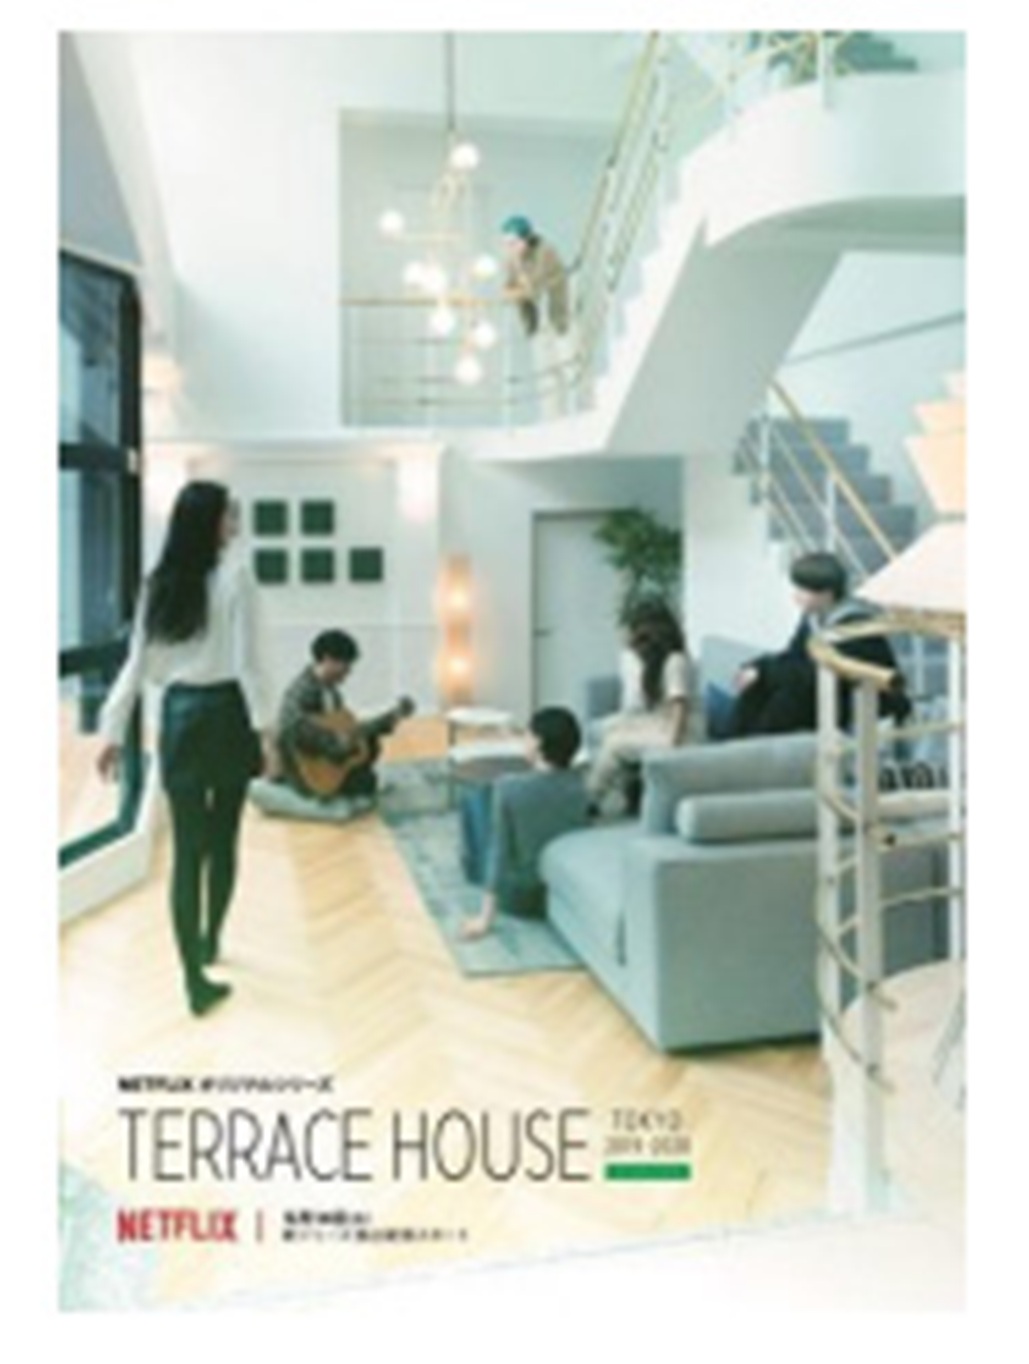 TERRACE HOUSE TOKYO 2019-2020